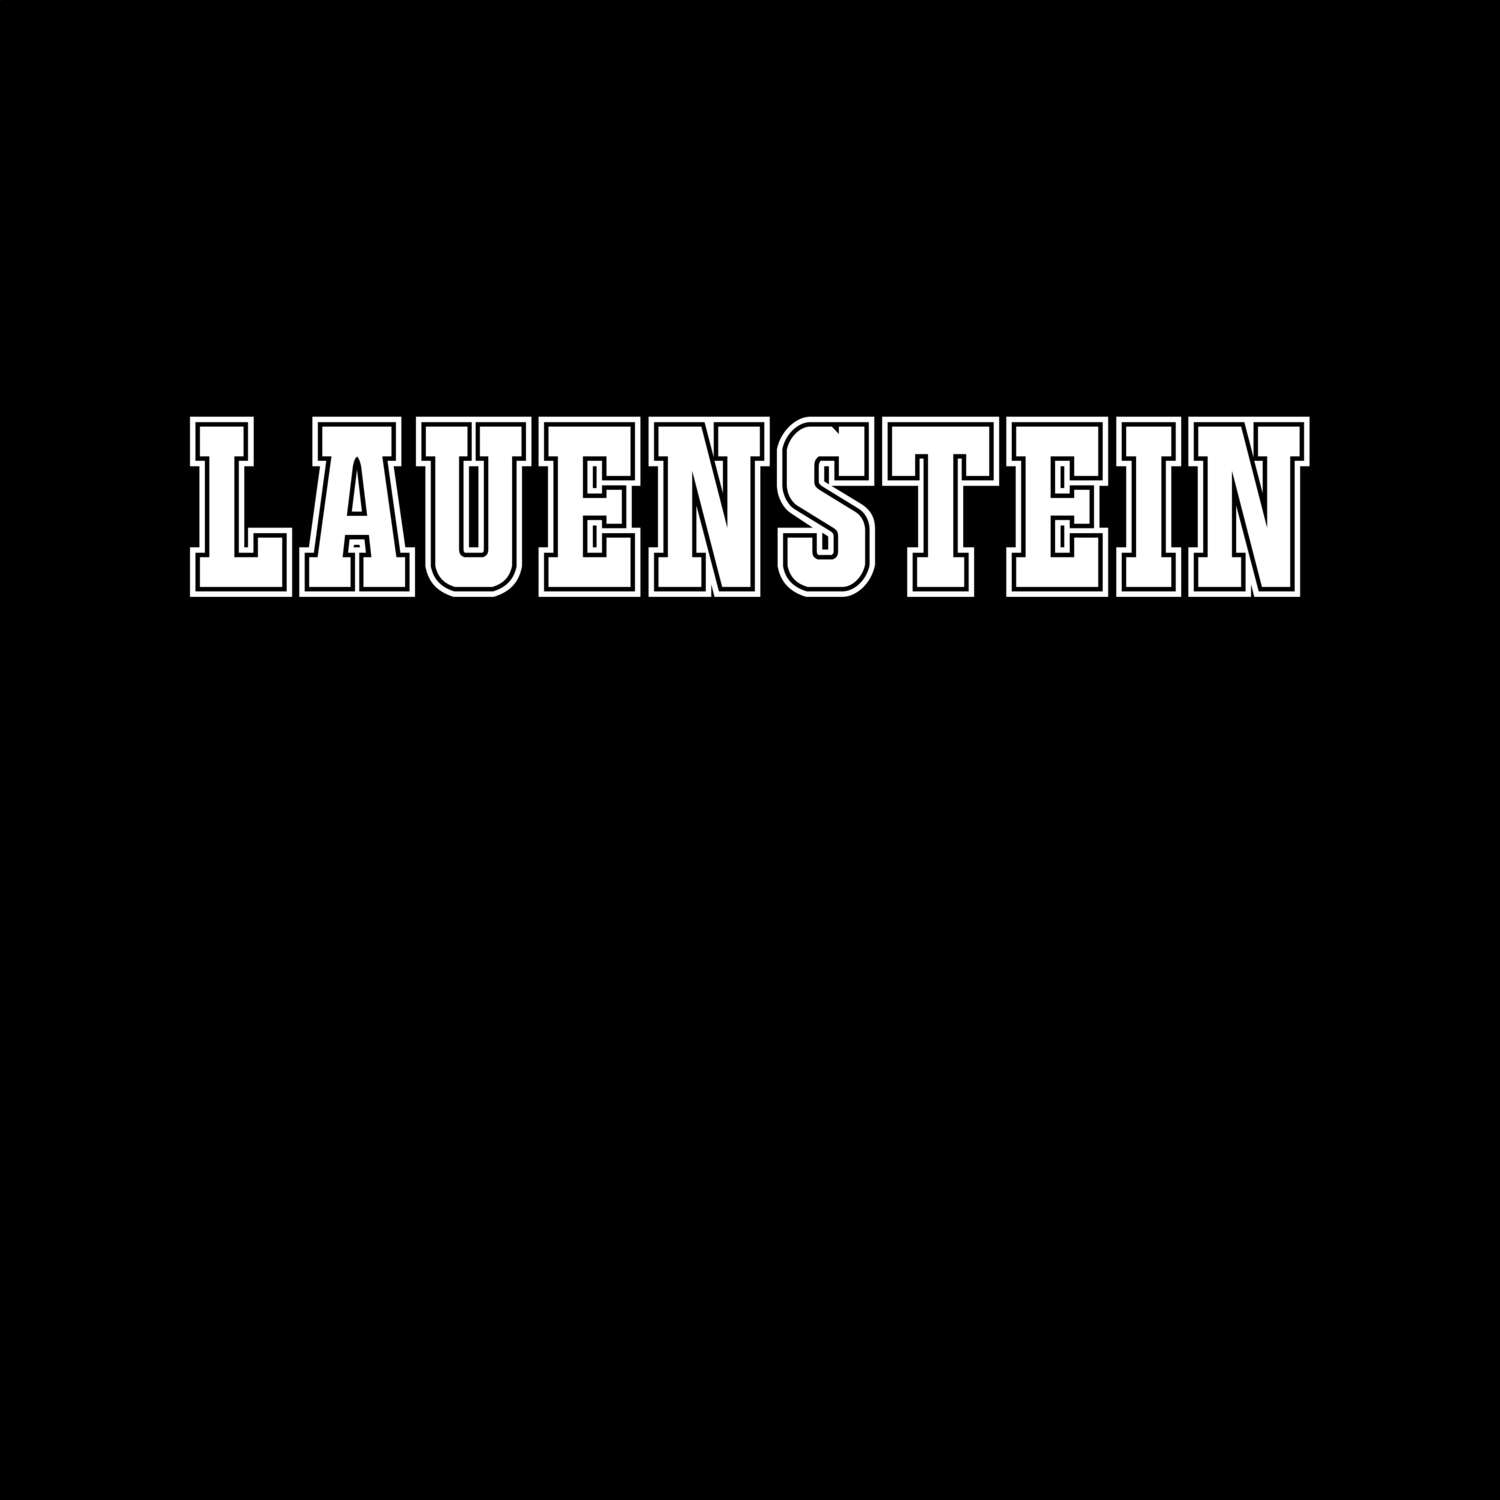 Lauenstein T-Shirt »Classic«